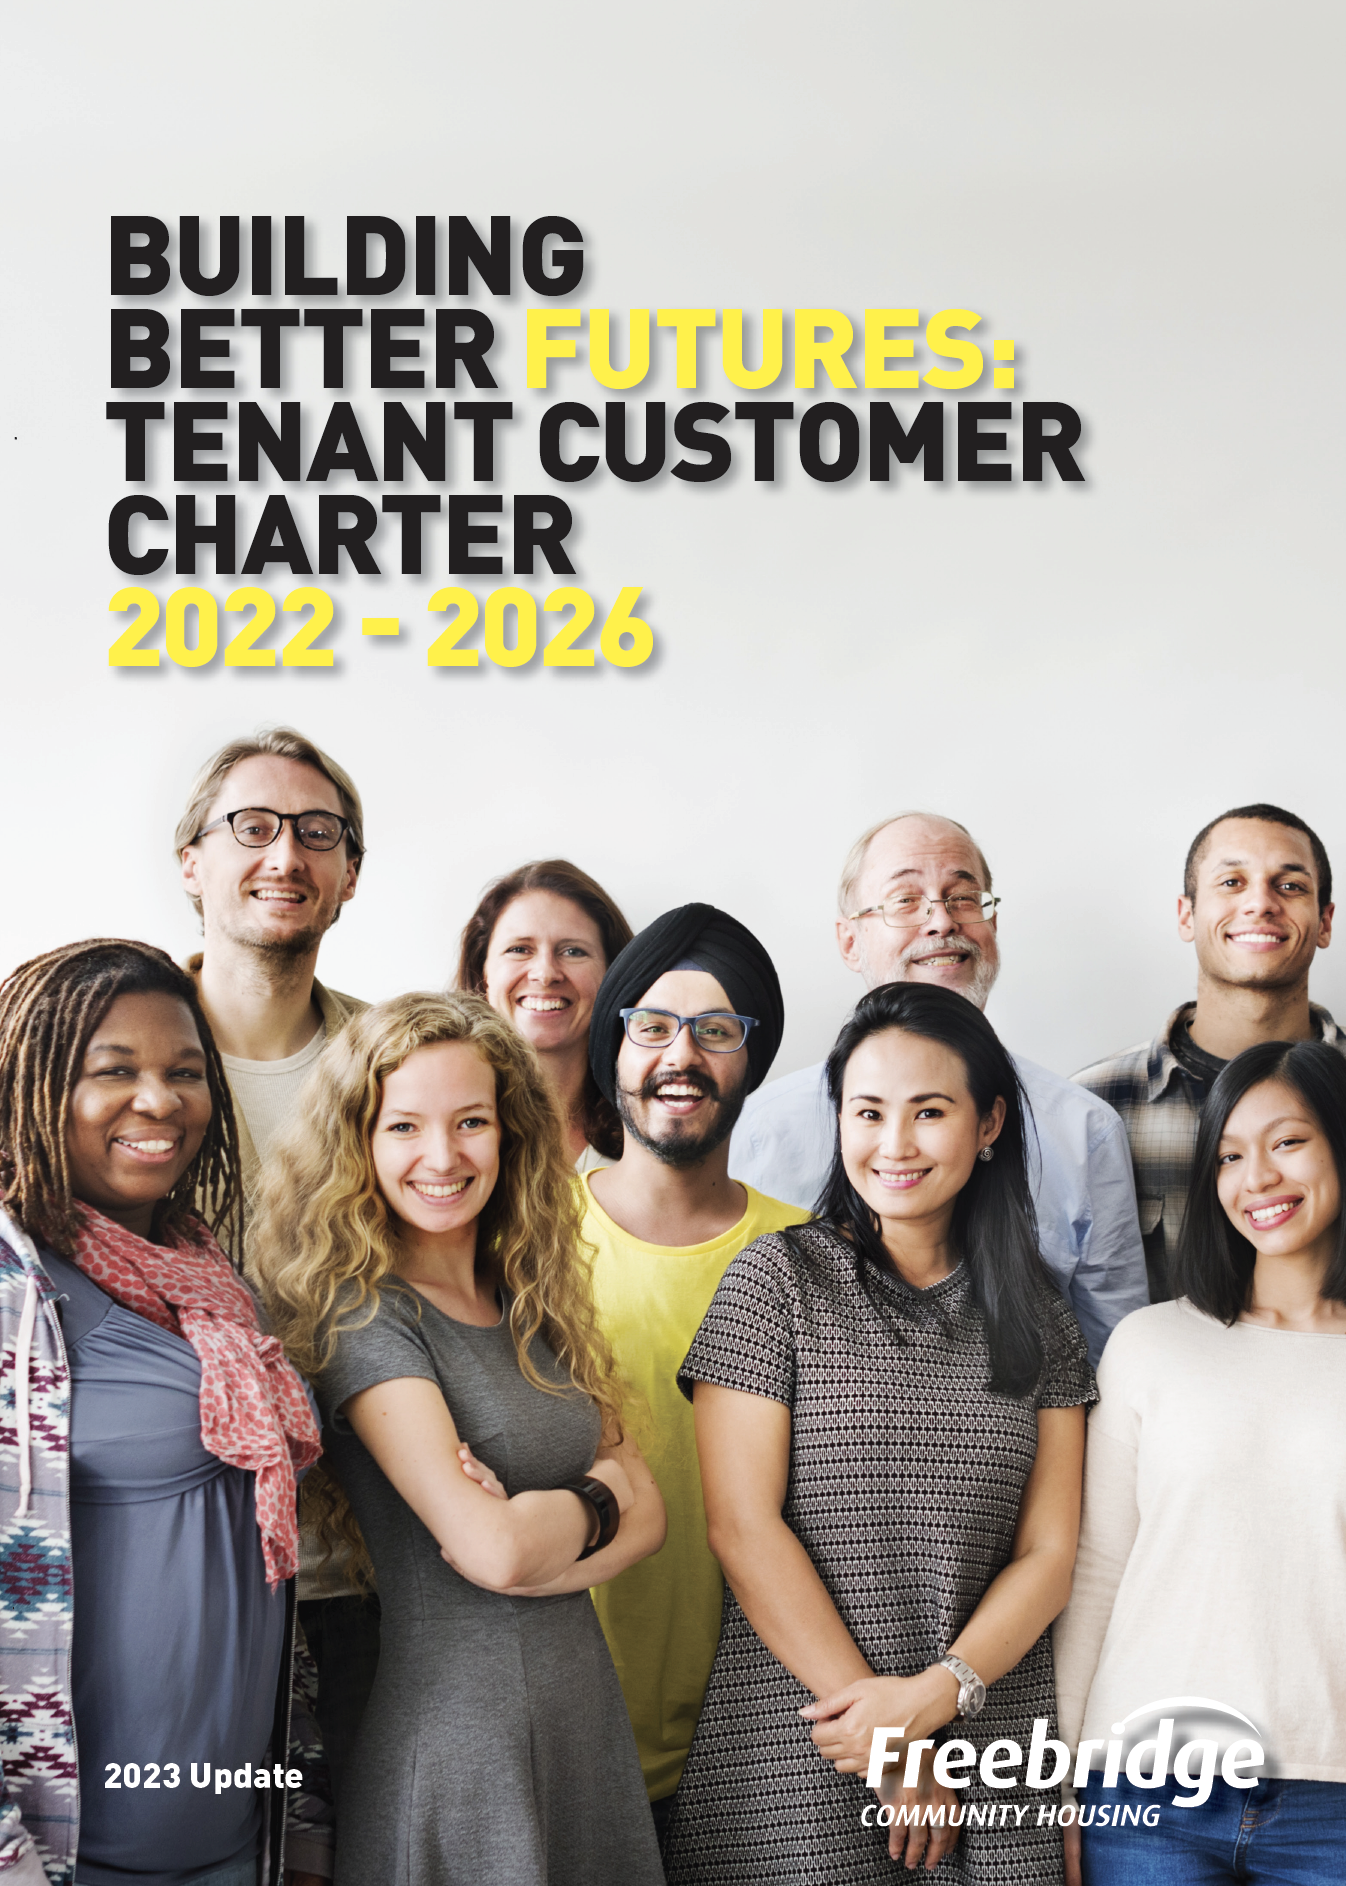 Building Better Futures: Tenant Customer Charter 2022-2026